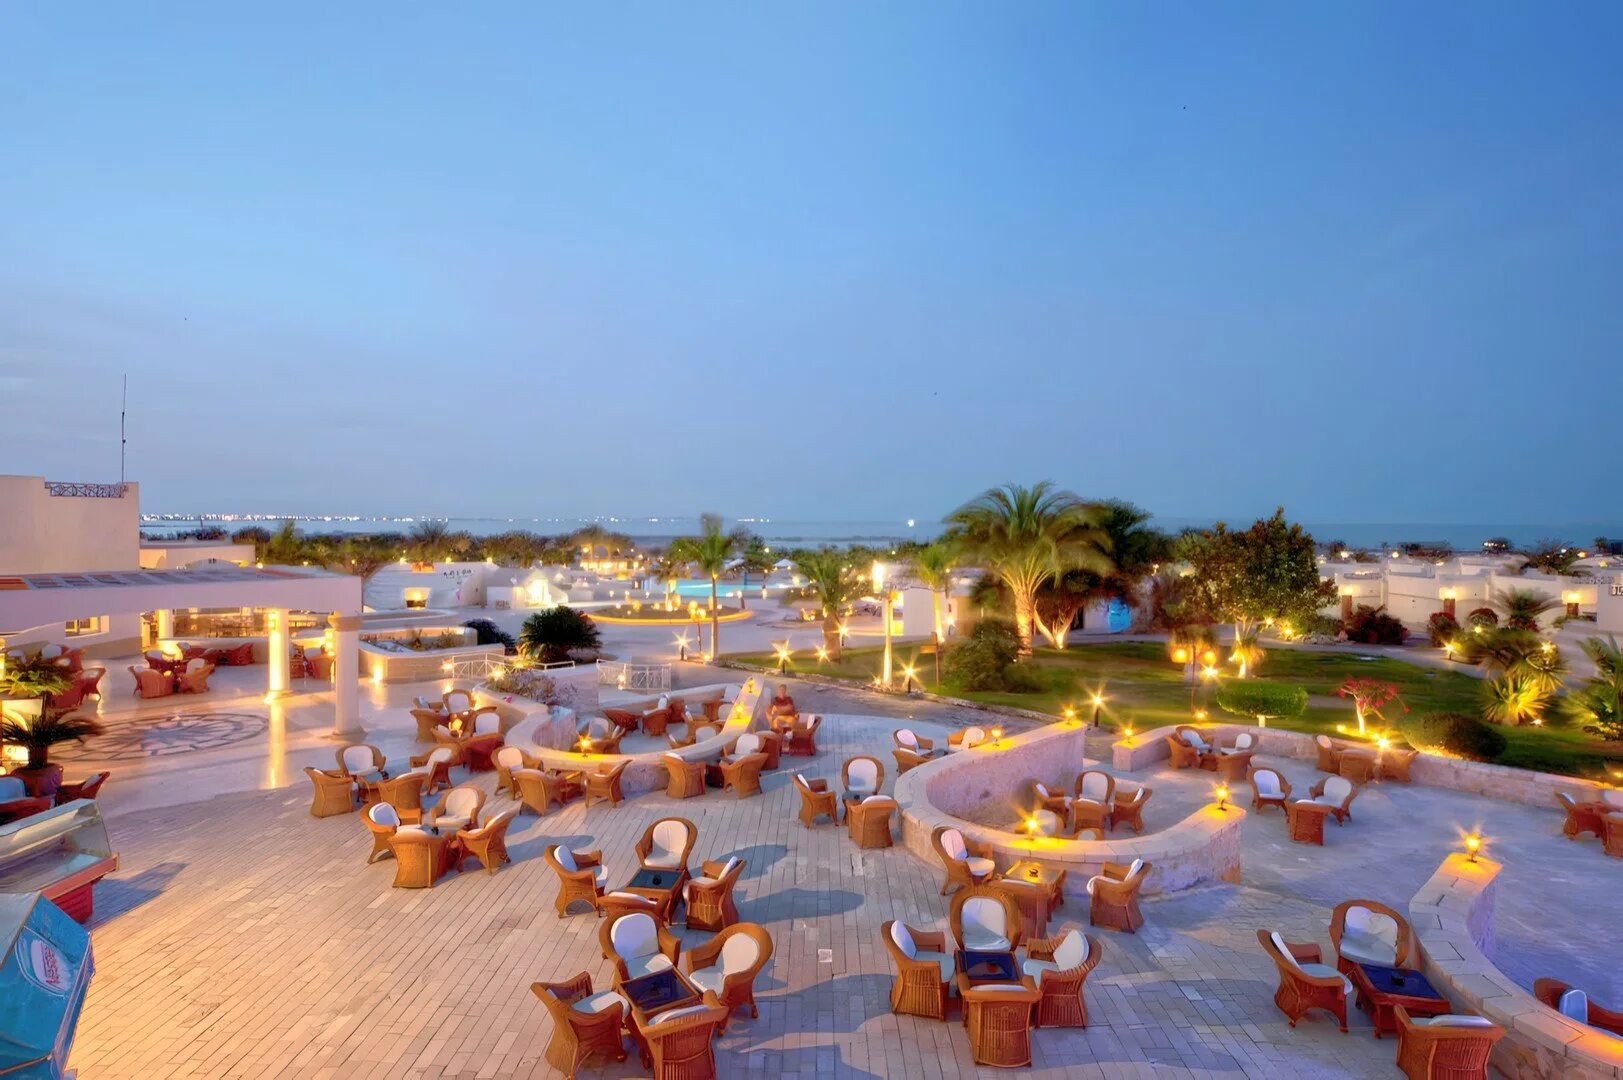 Coral beach rotana. Coral Beach Hotel Hurghada Египет Хургада. Корал Бич отель Хургада. Корал Бич Резорт Хургада 4. Египет Хургада отель Корал Бич Резорт 4 звезды.